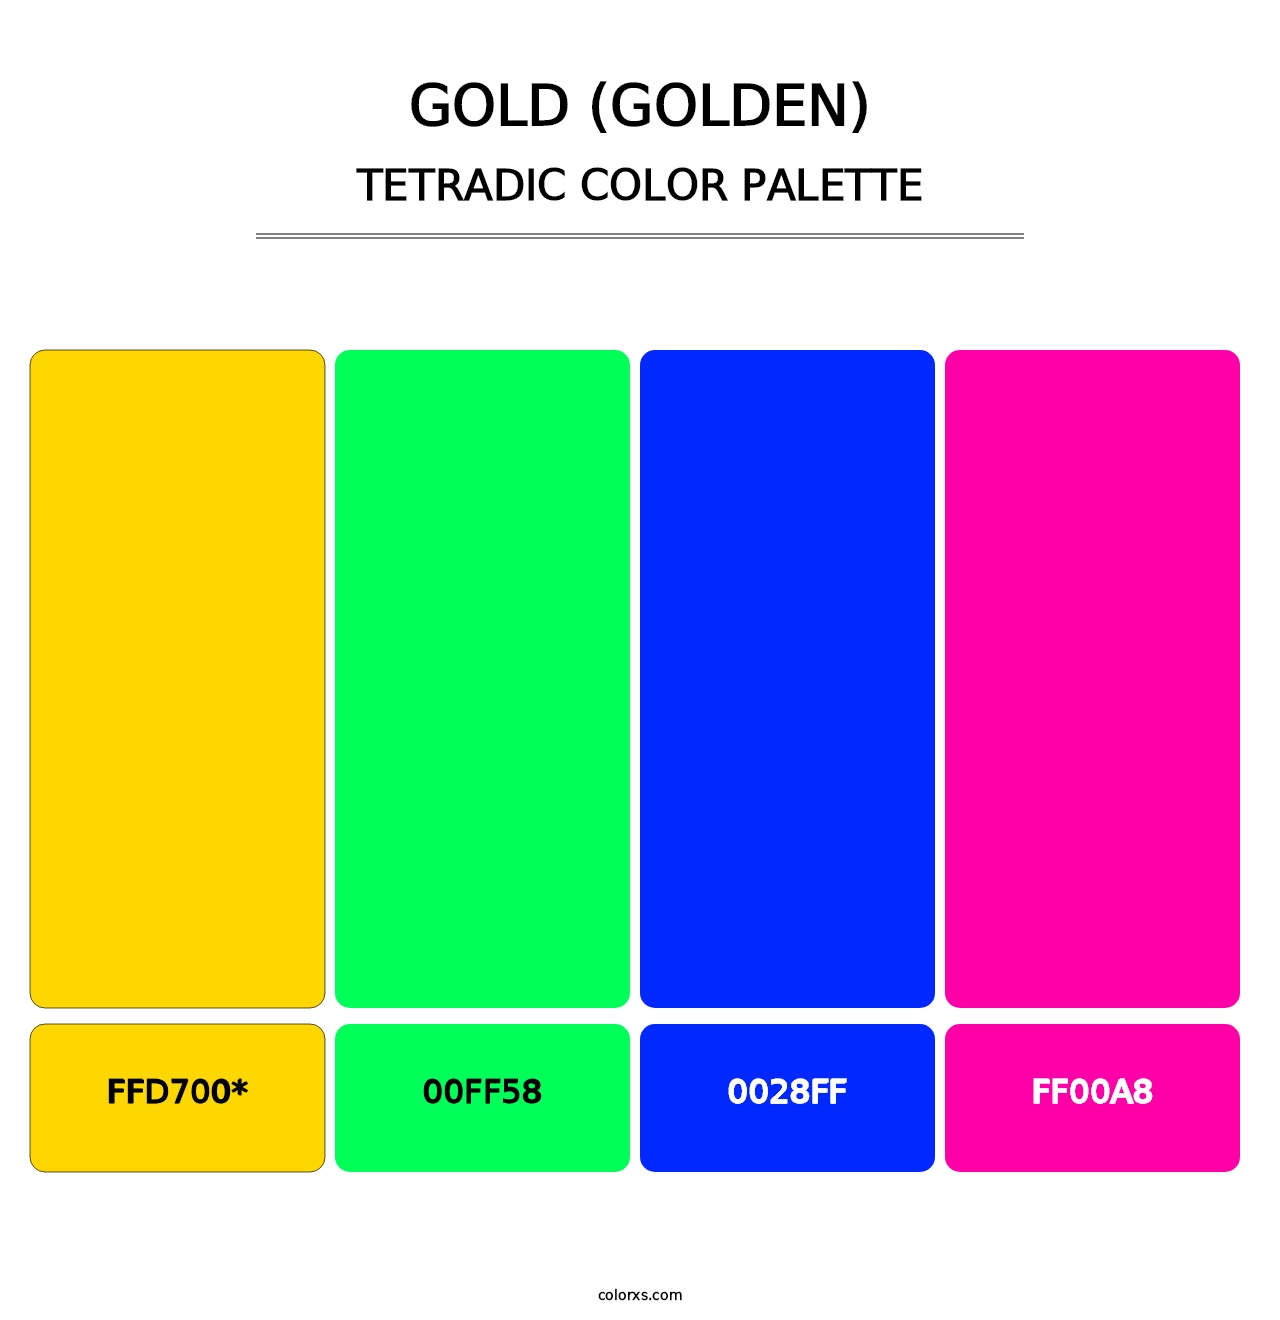 Gold (Golden) - Tetradic Color Palette